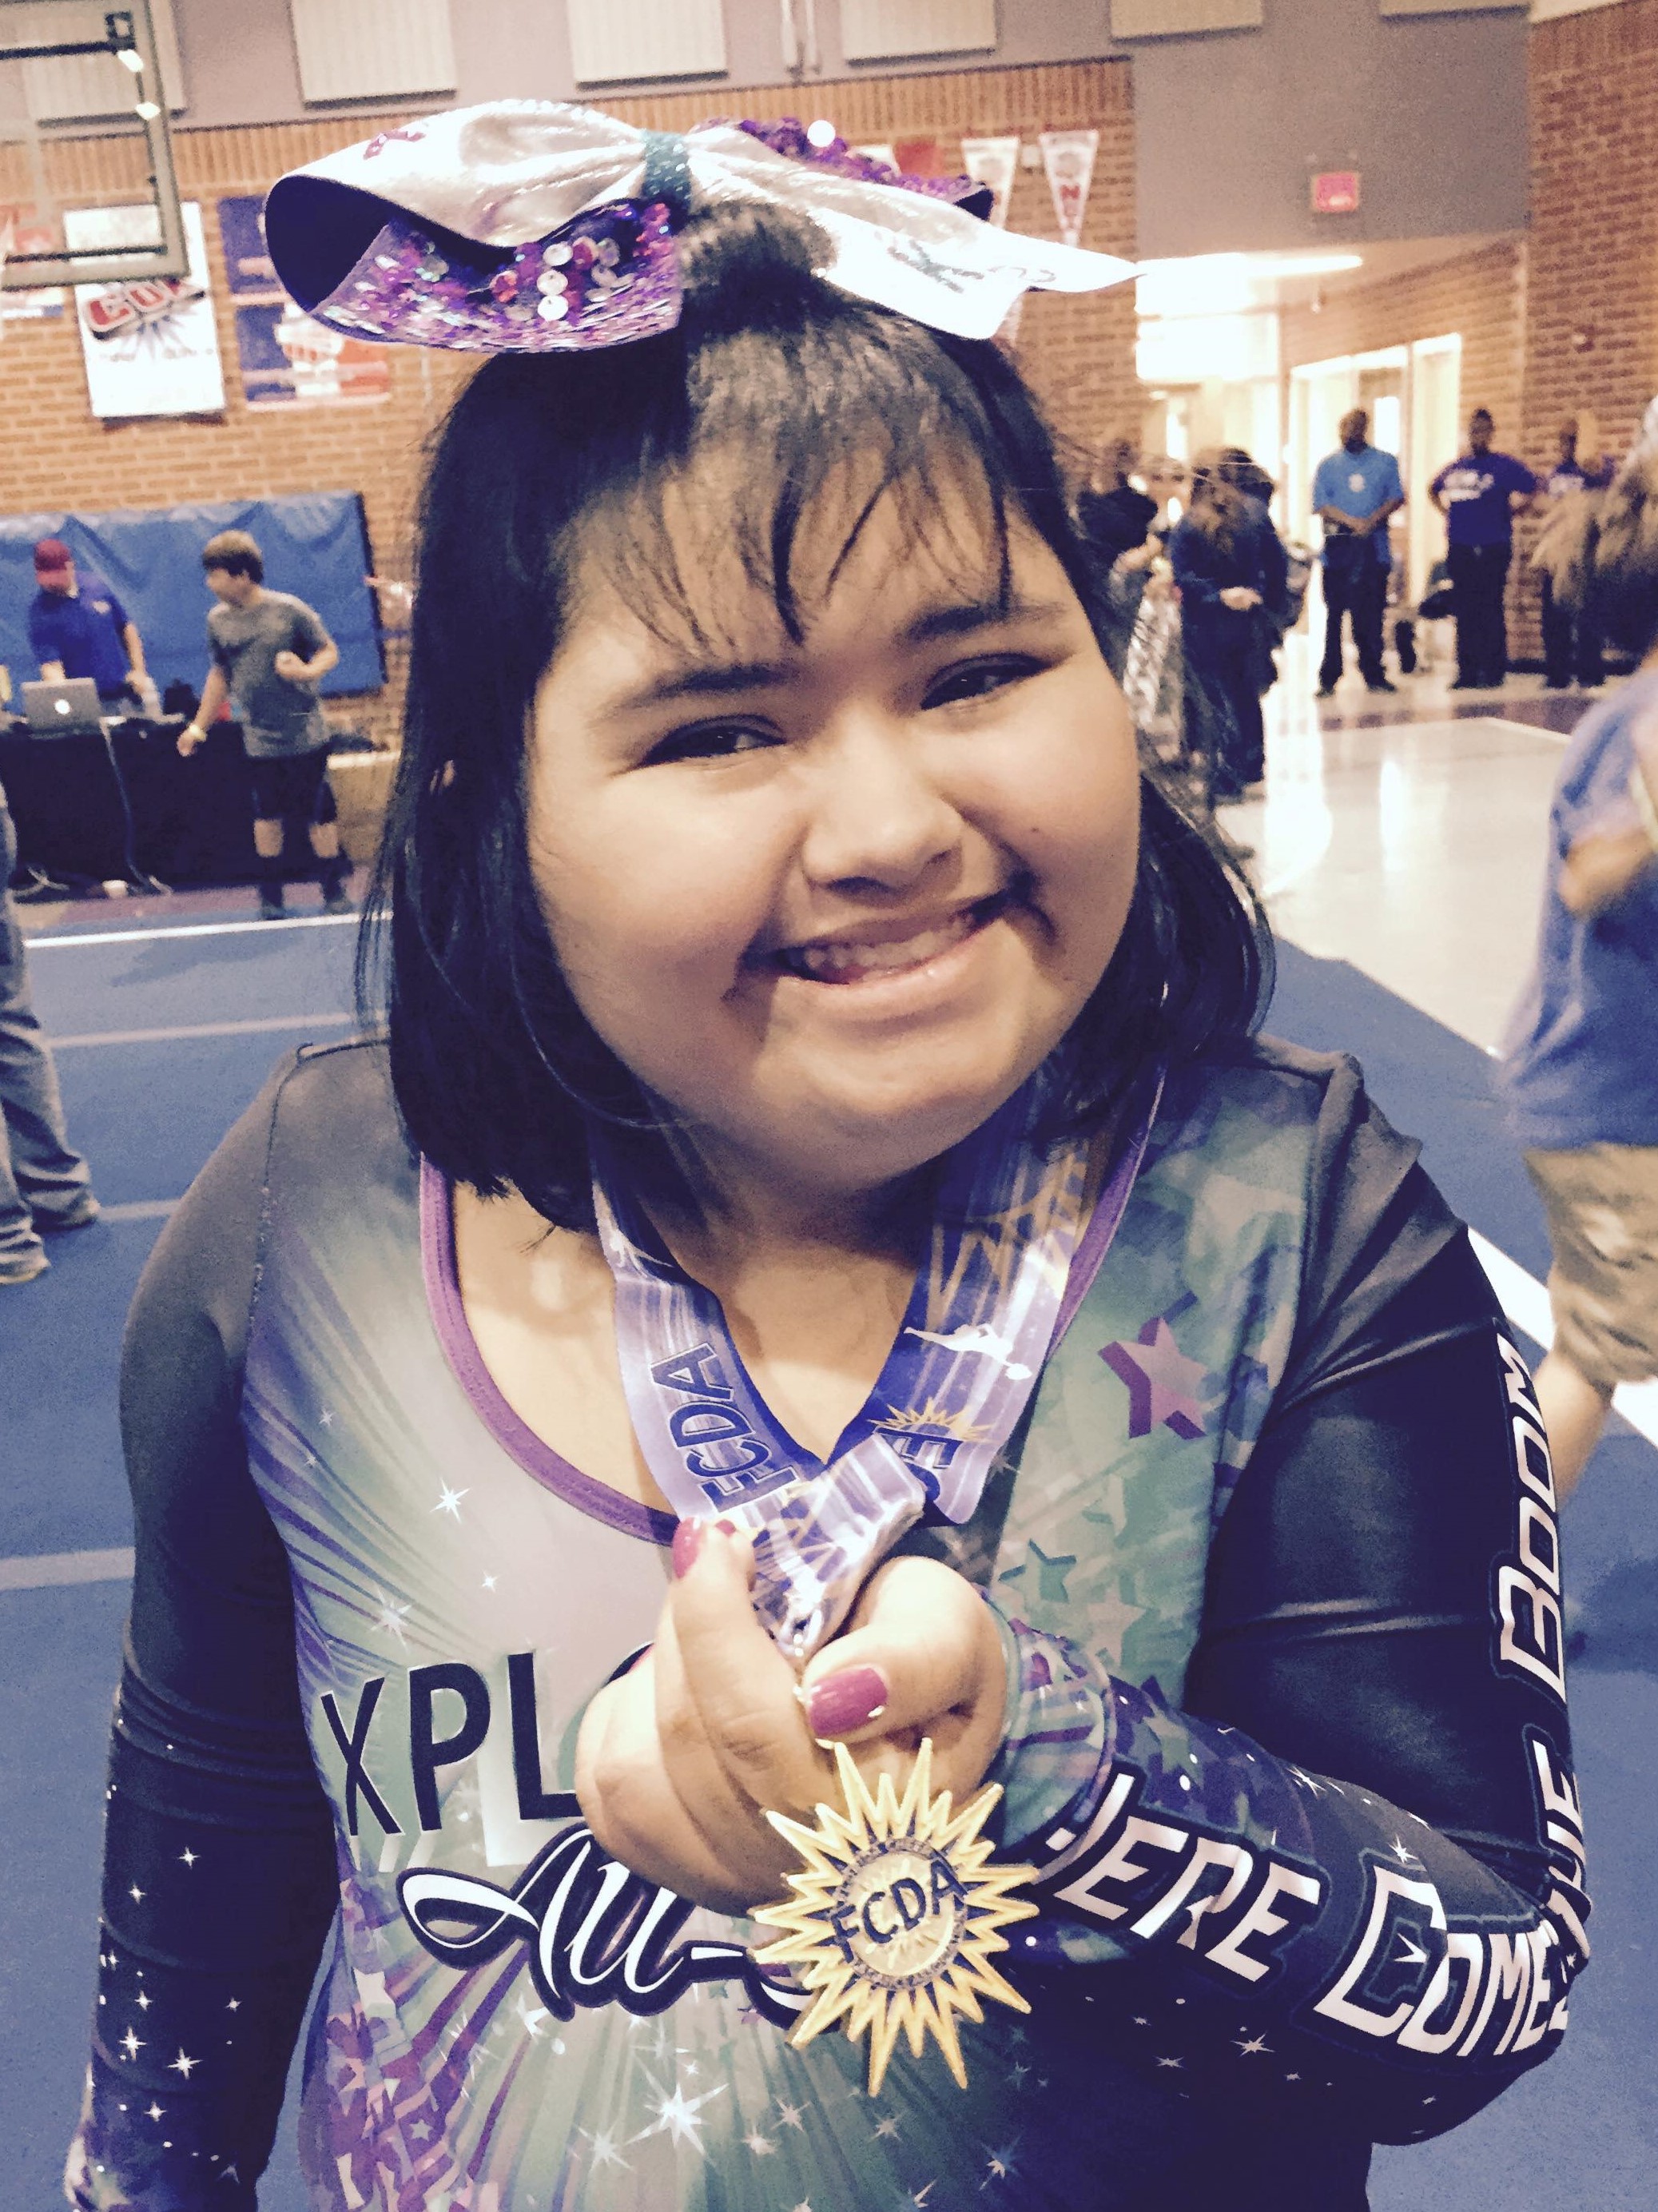 Little girl holding up her gymnastics medal and smiling